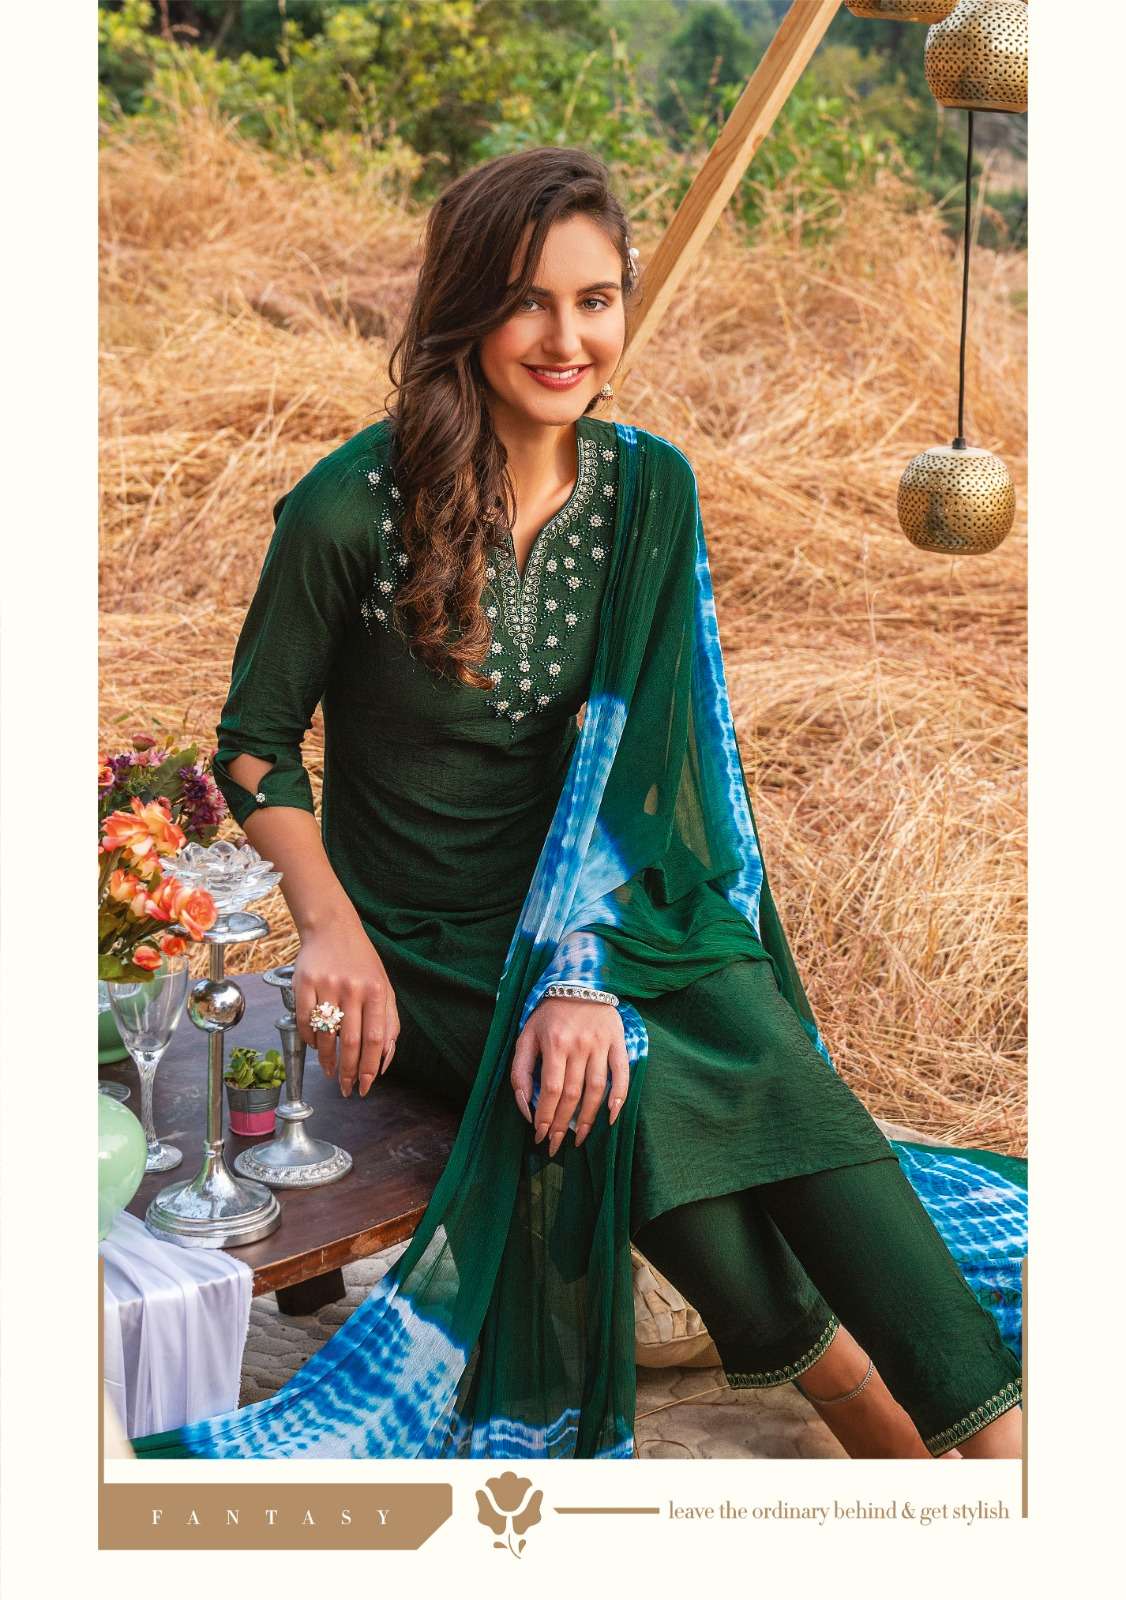 anju fabrics nakhrali vol-4 2711-2716 series exclusive designer kurti and pant dupatta manufacturer surat 